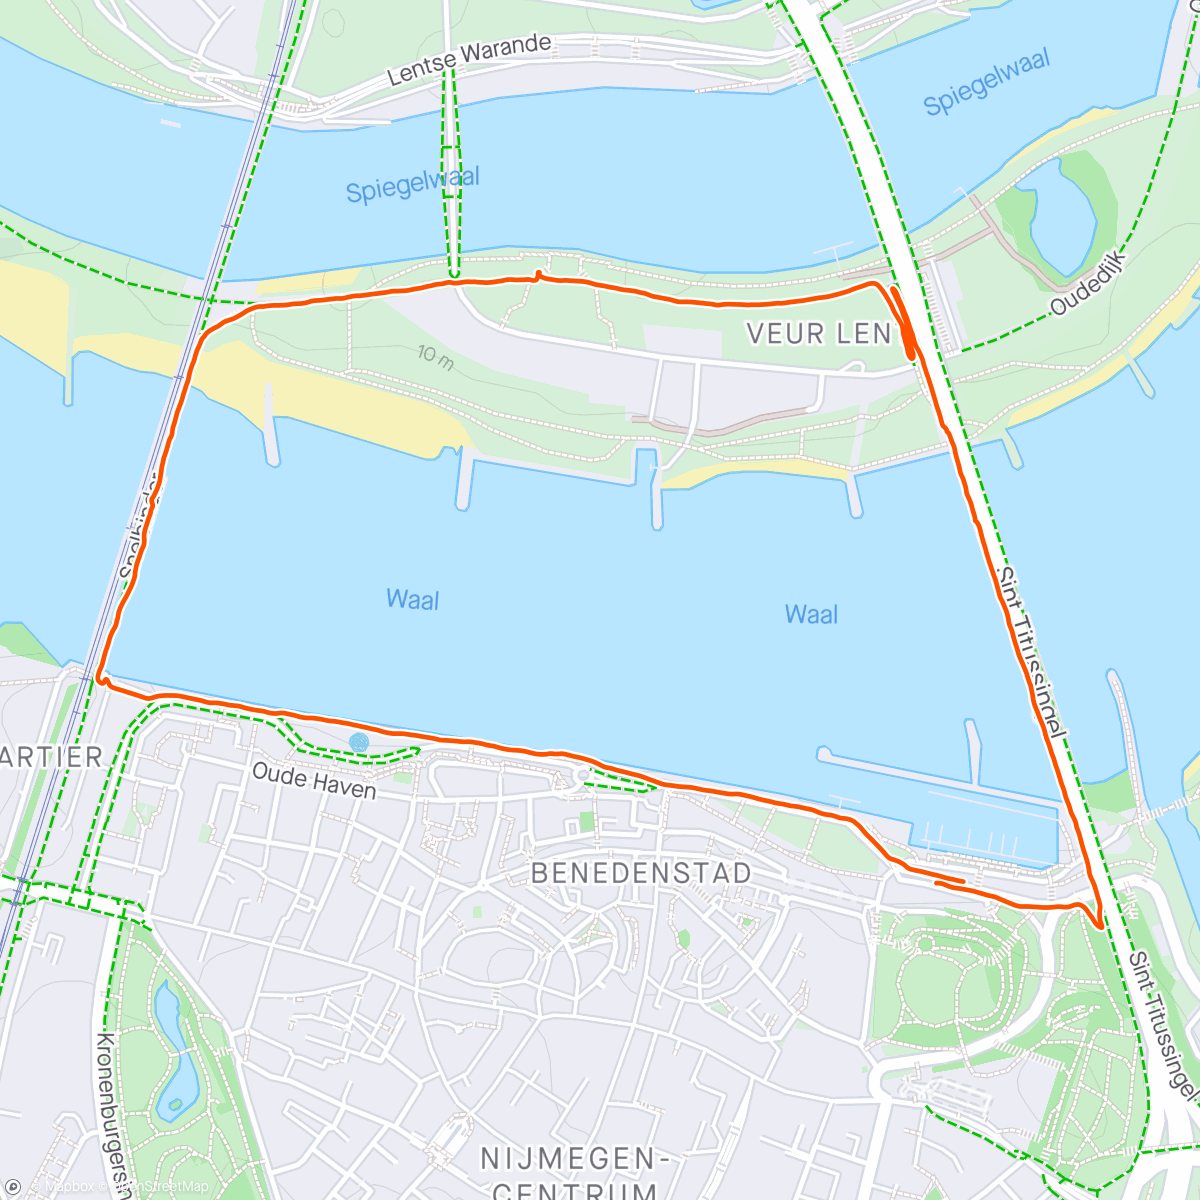 Carte de l'activité Bruggenrondje Nijmegen